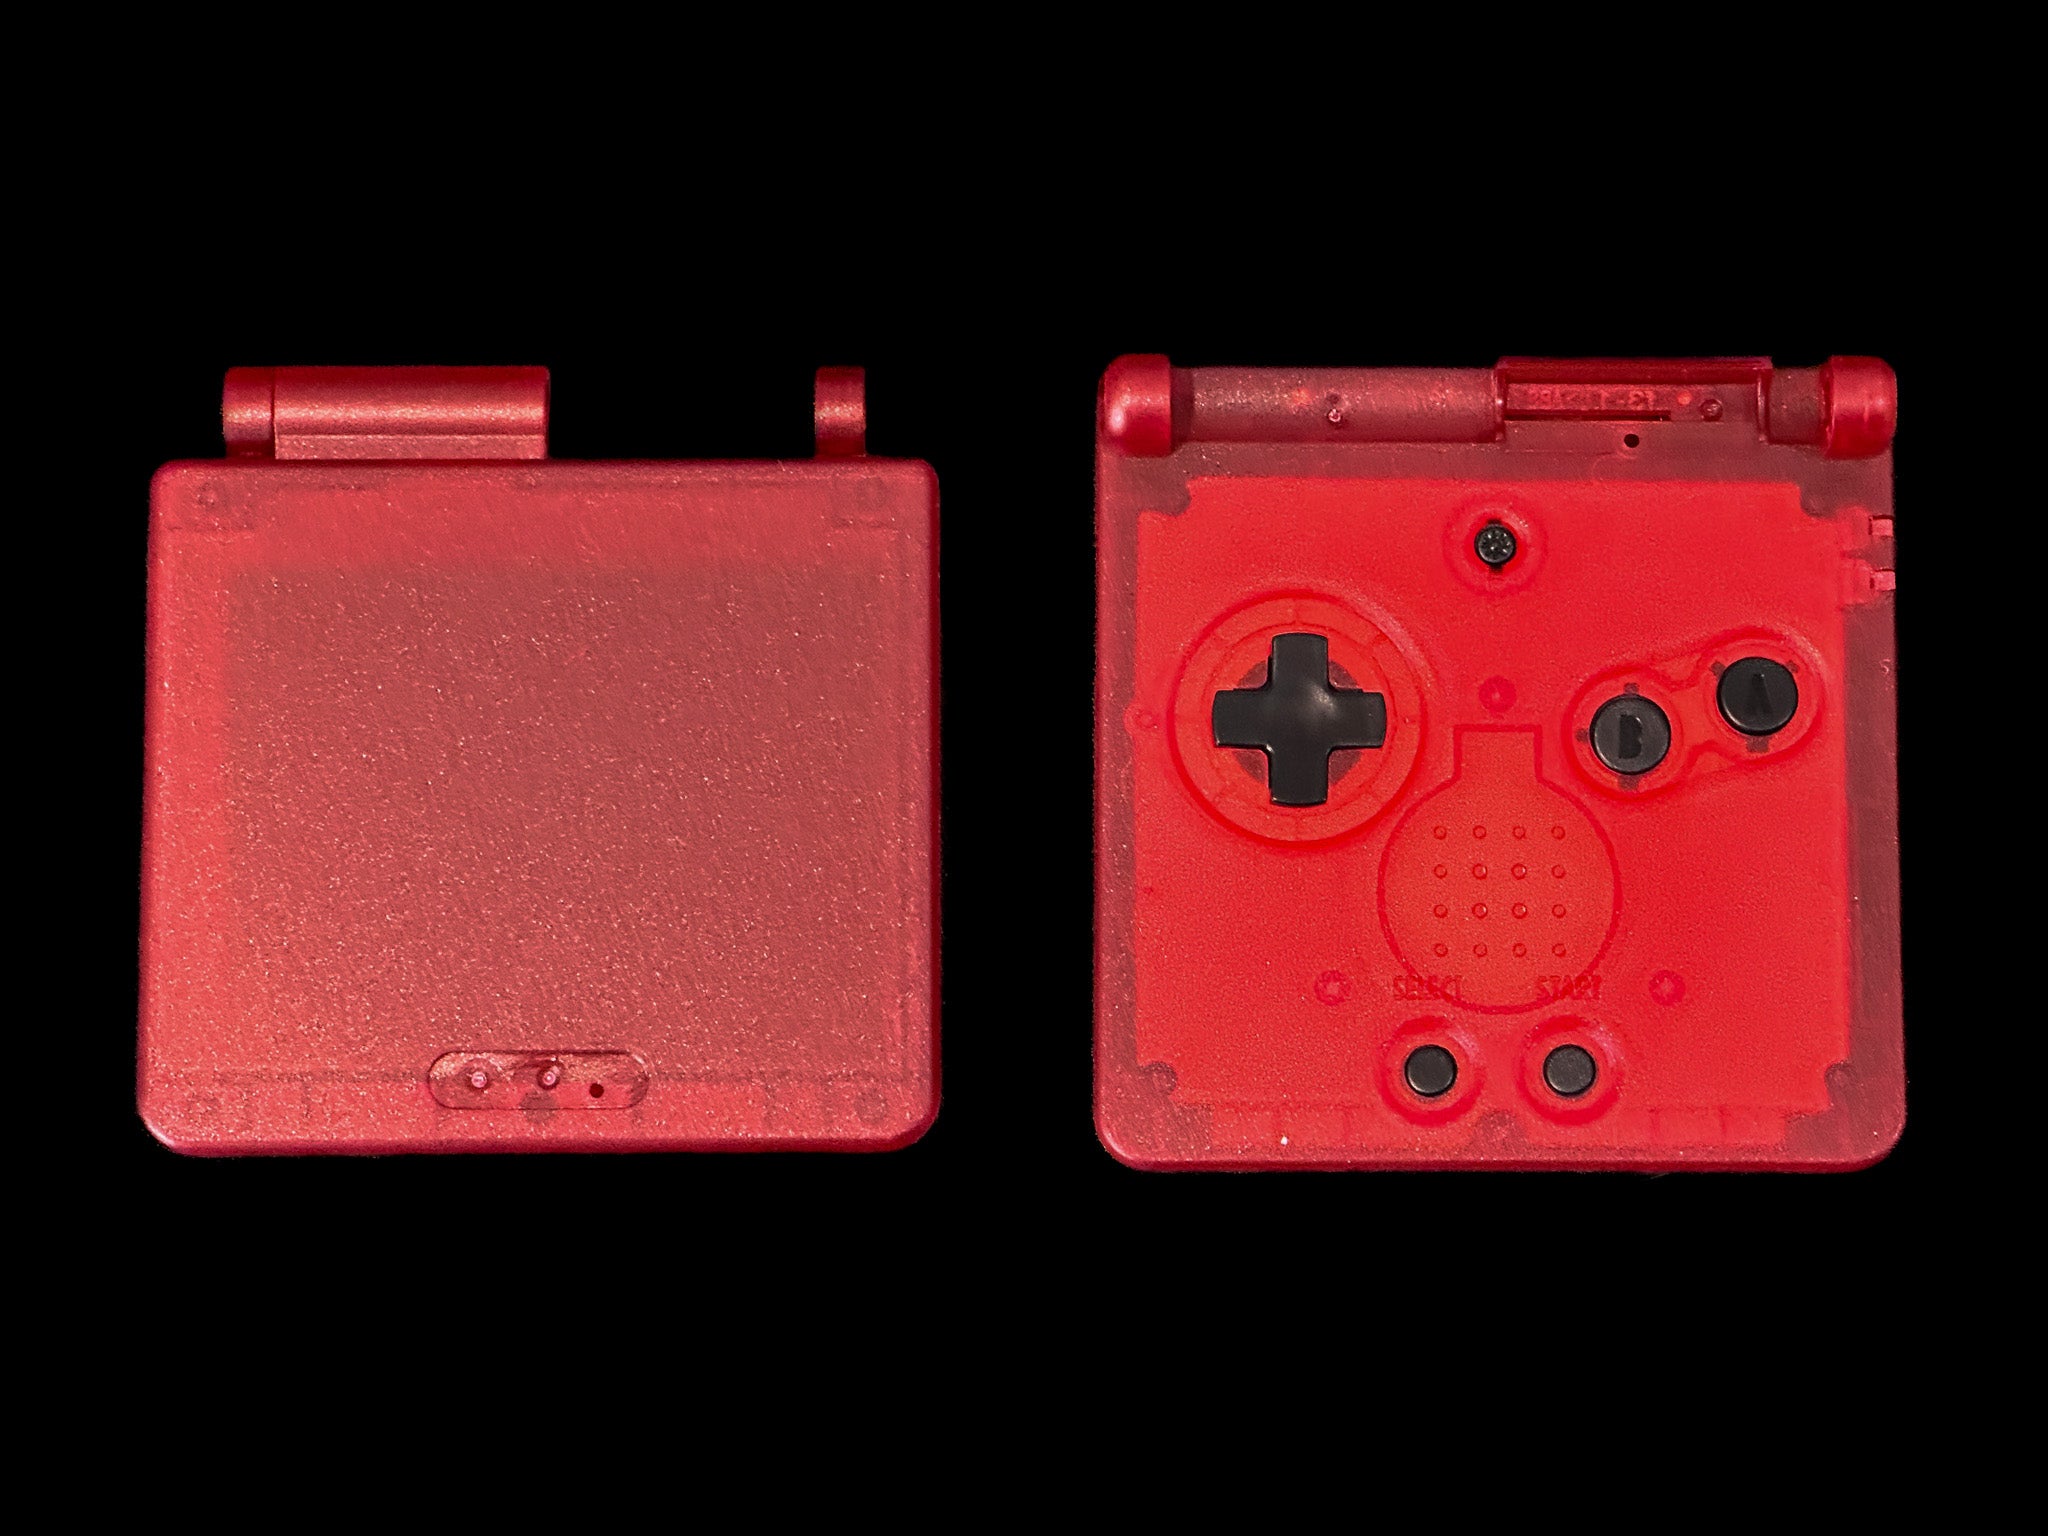 Game Boy Advance SP IPS Mod Console